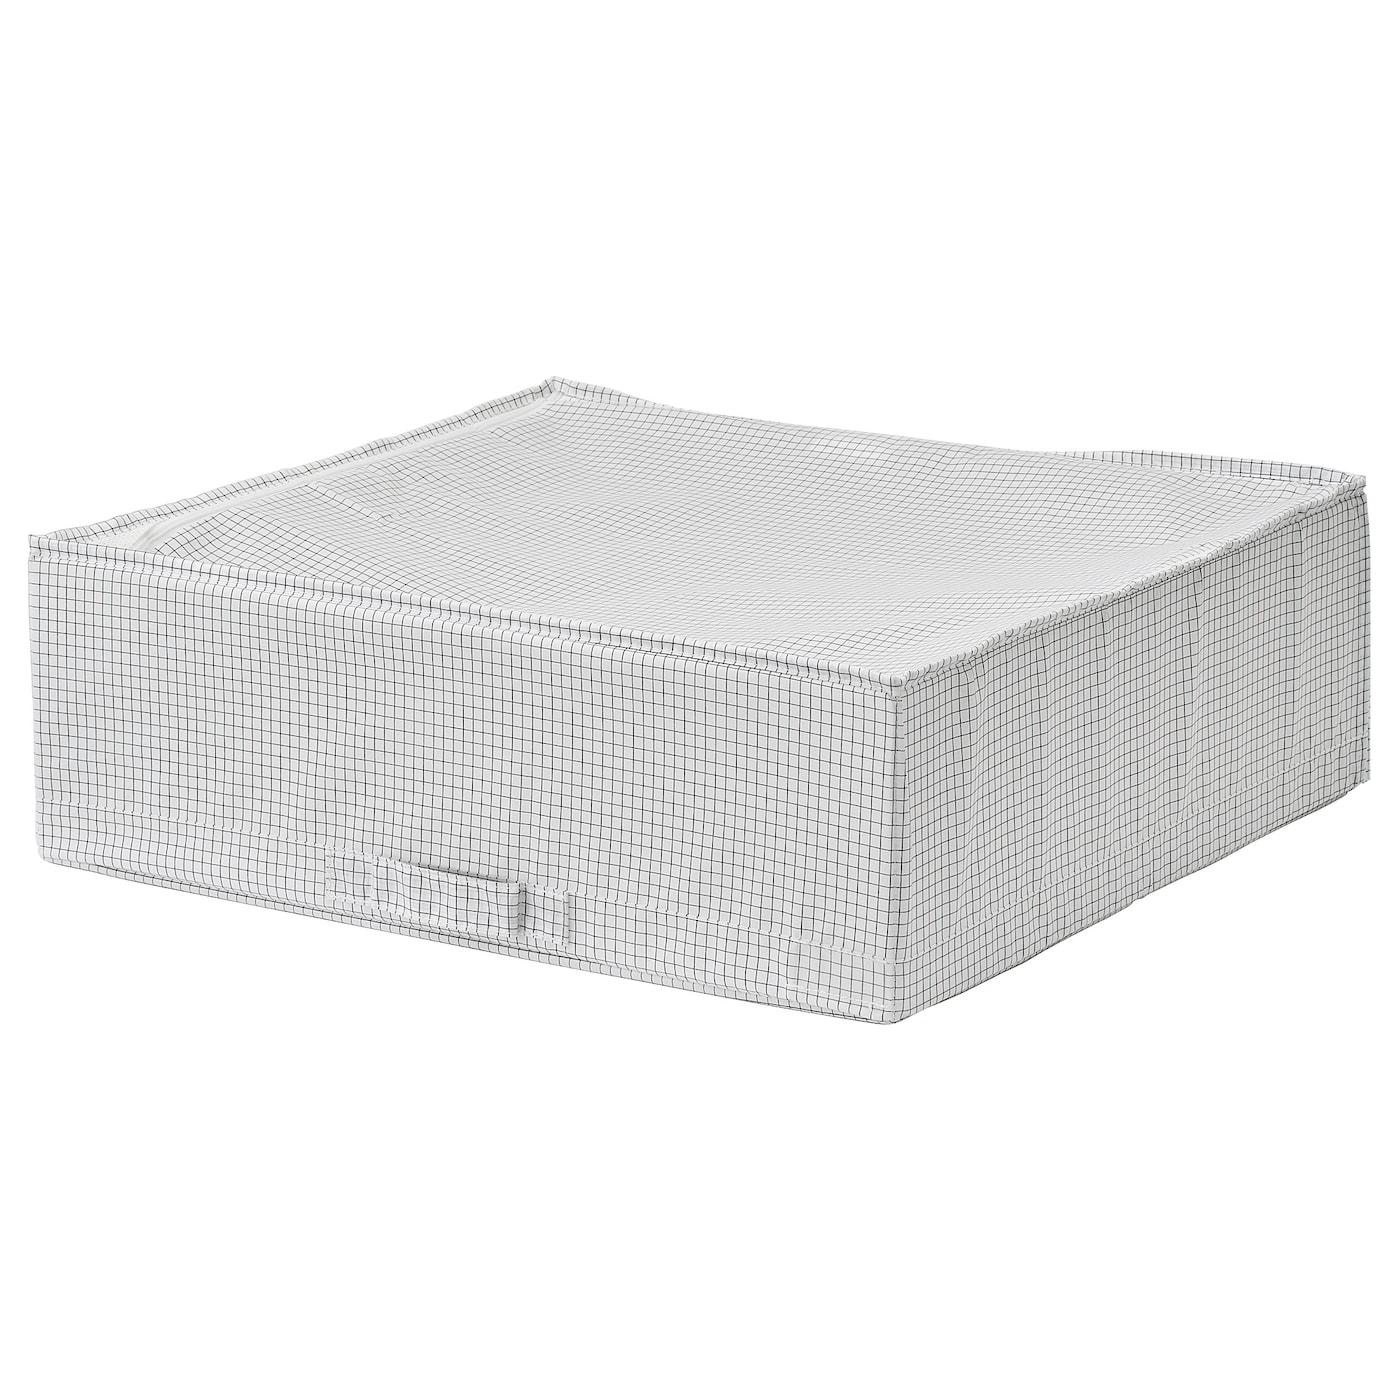 STUK СТУК Сумка для хранения, белый/серый, 55x51x18 см IKEA stuk стук органайзер белый 26x20x6 см ikea